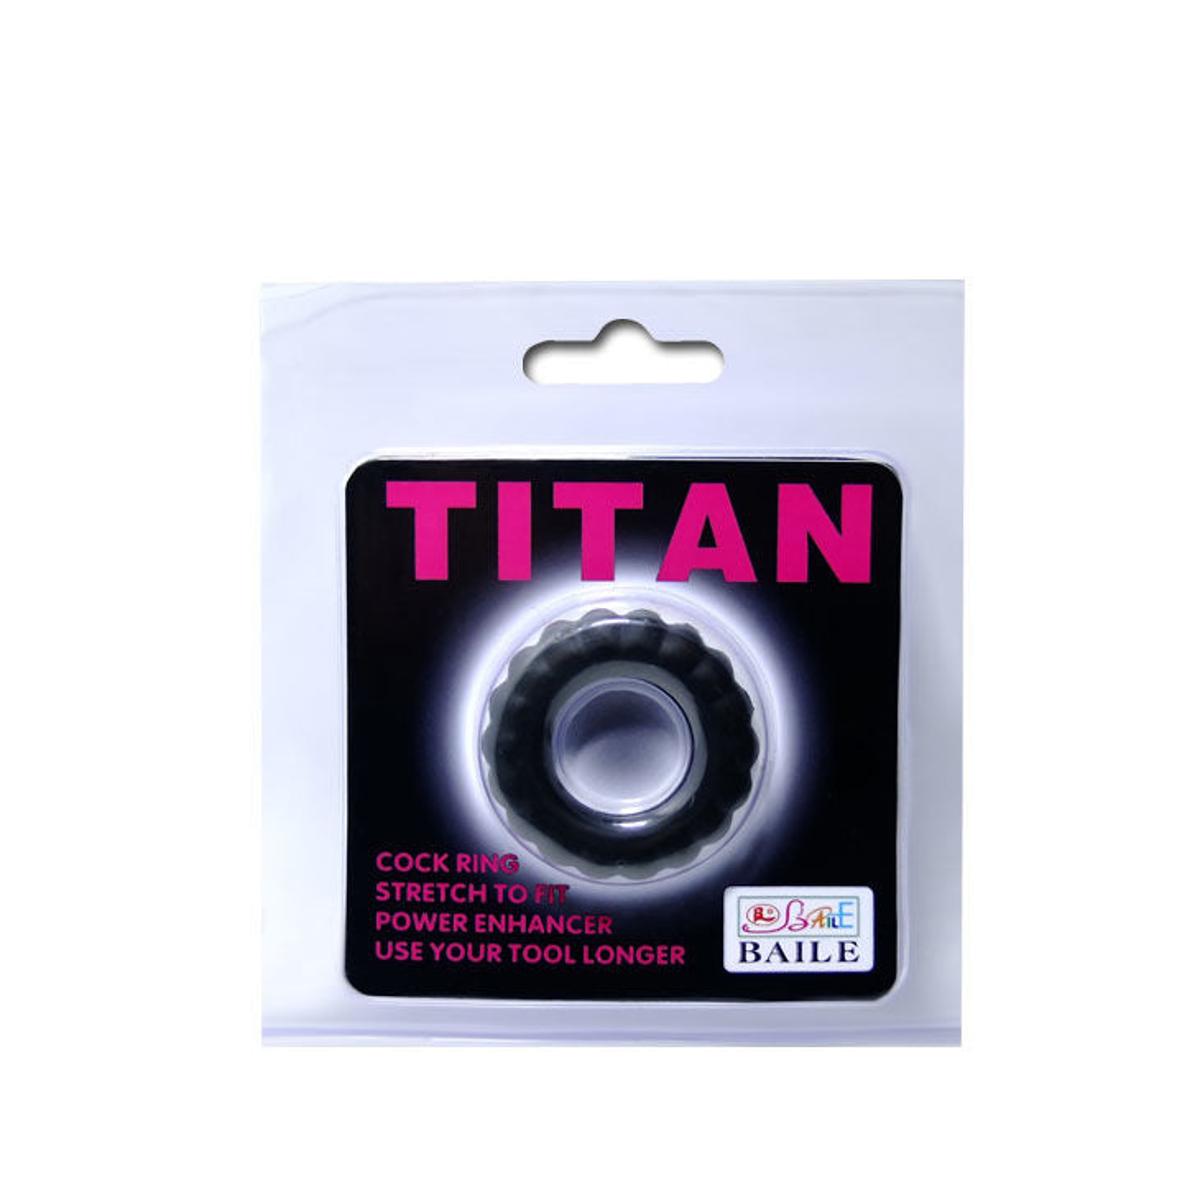 Penisring "Titan" - OH MY! FANTASY